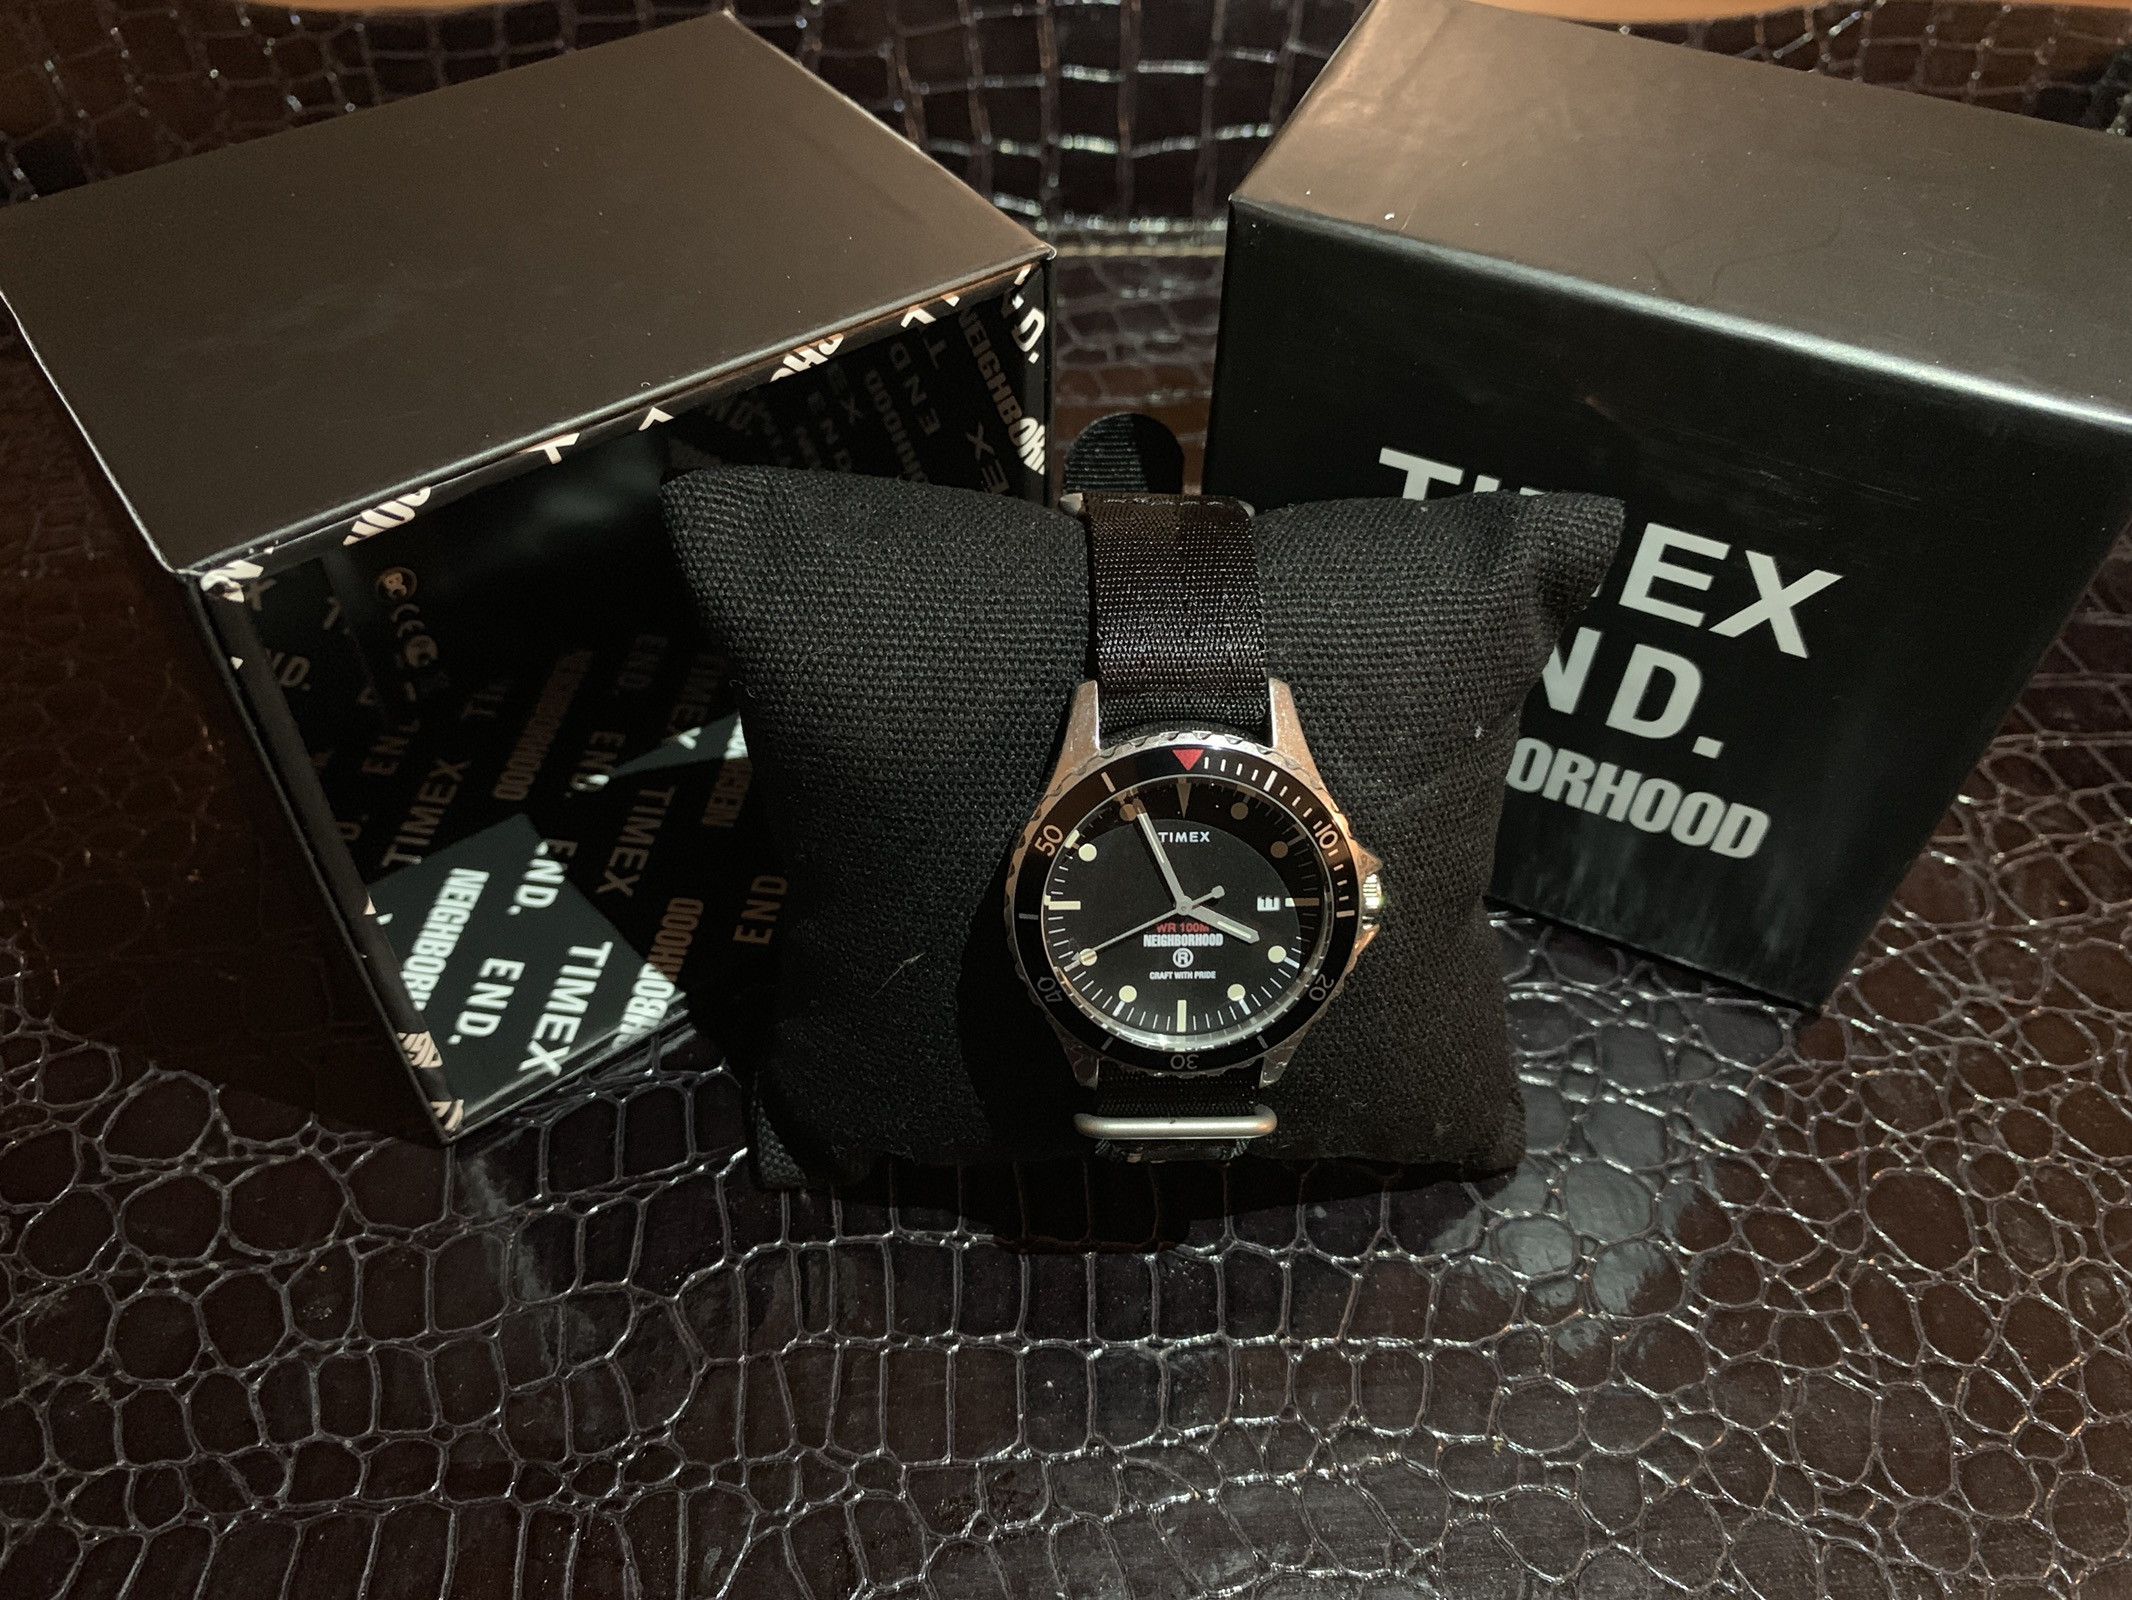 Timex END. x Timex x Neighborhood 18004 Watch | Grailed